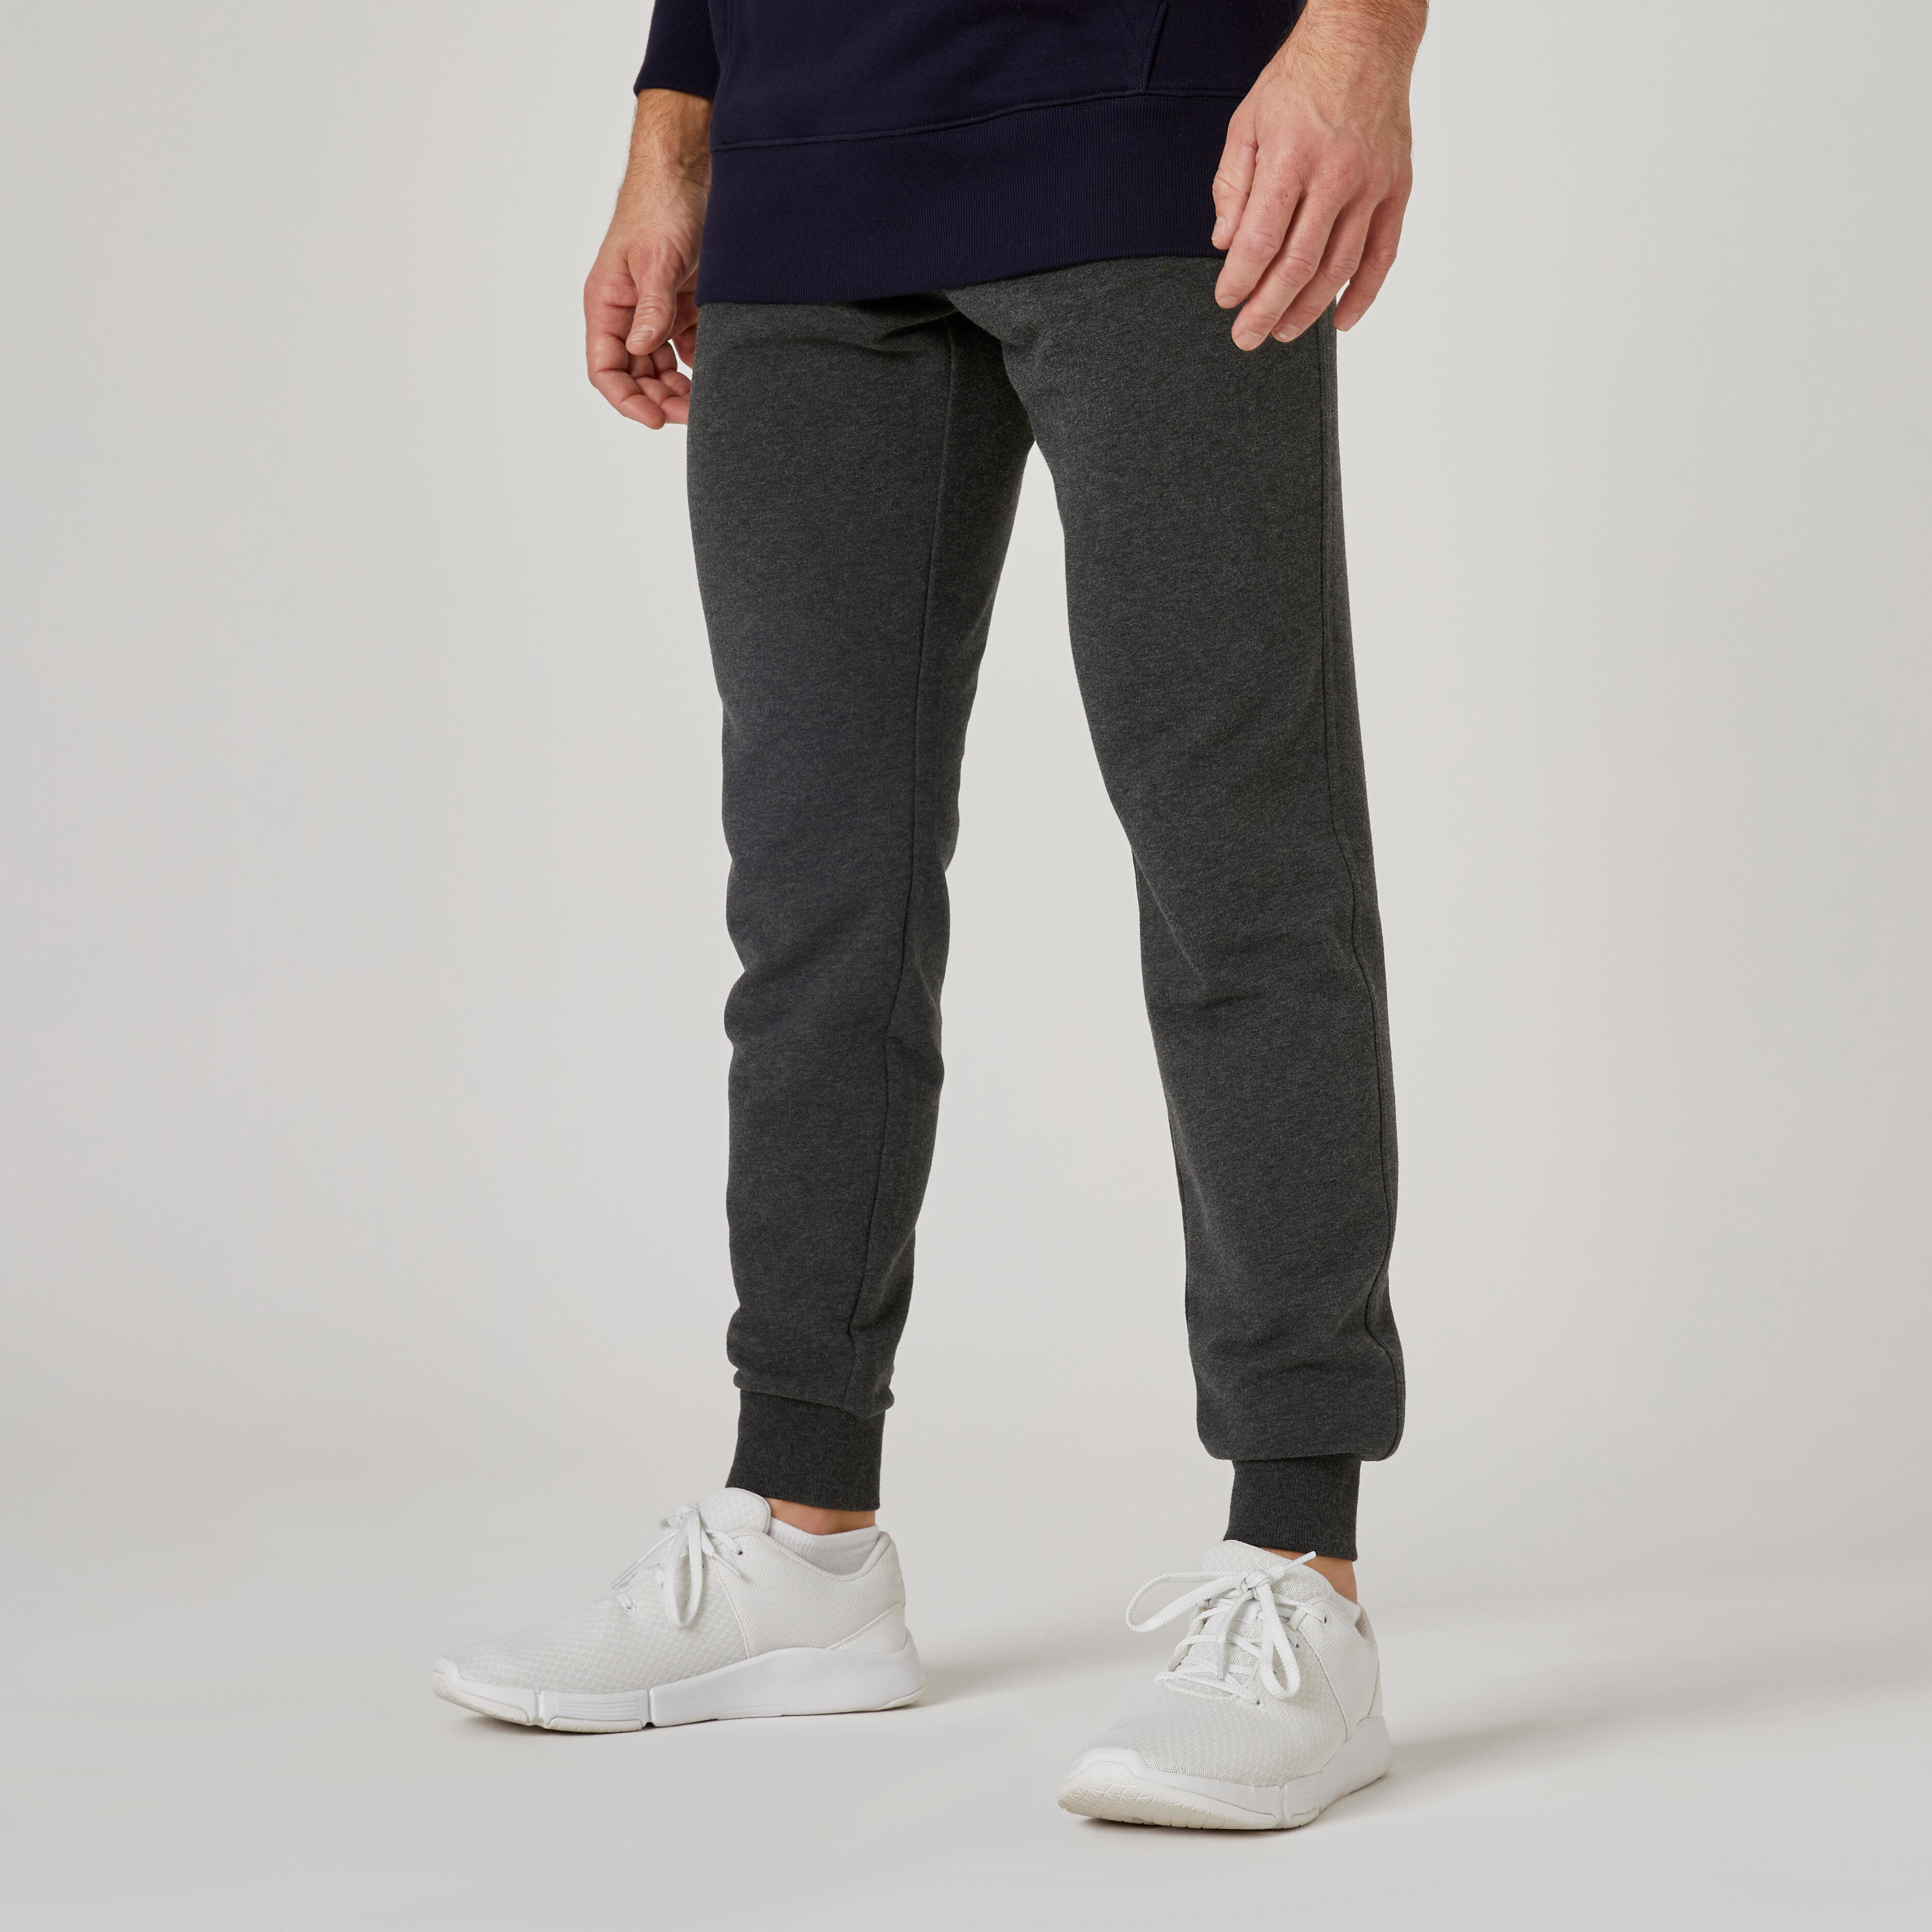 Urban Ranger by Pantaloons Grey Cotton Slim Fit Jogger Pants